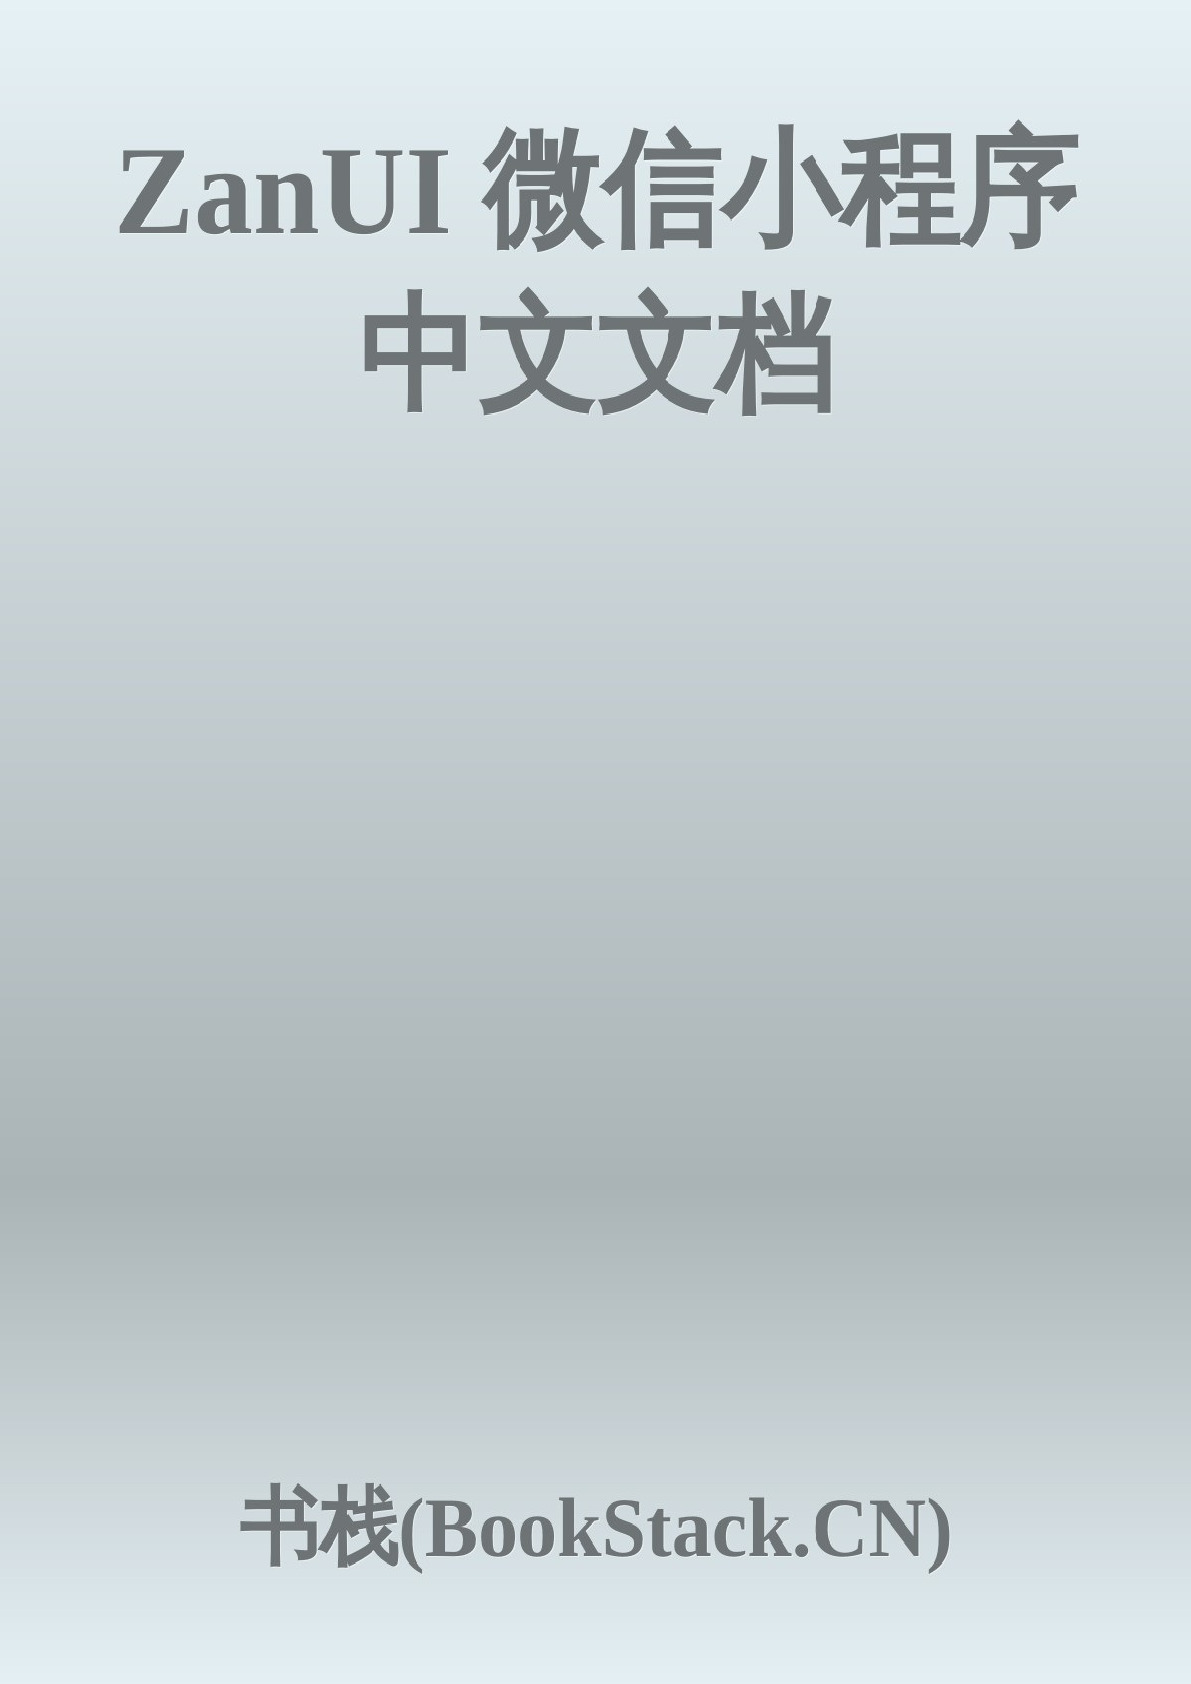 ZanUI-微信小程序中文文档